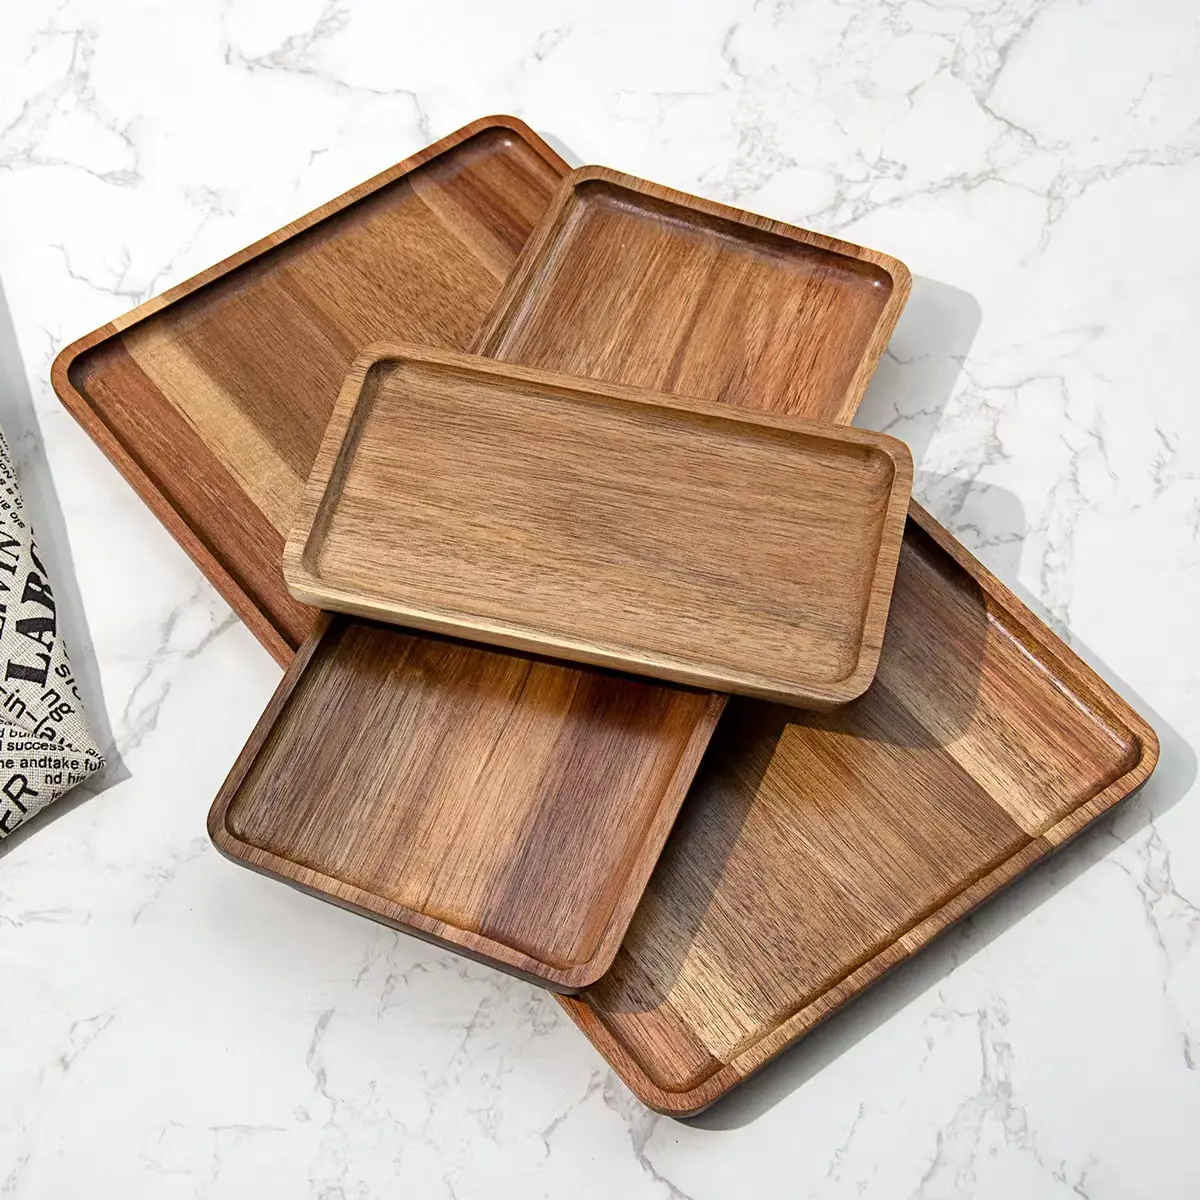 Wholesale custom logo wooden Japanese service tray Home breakfast cake saucer Acacia wood rectangular tray